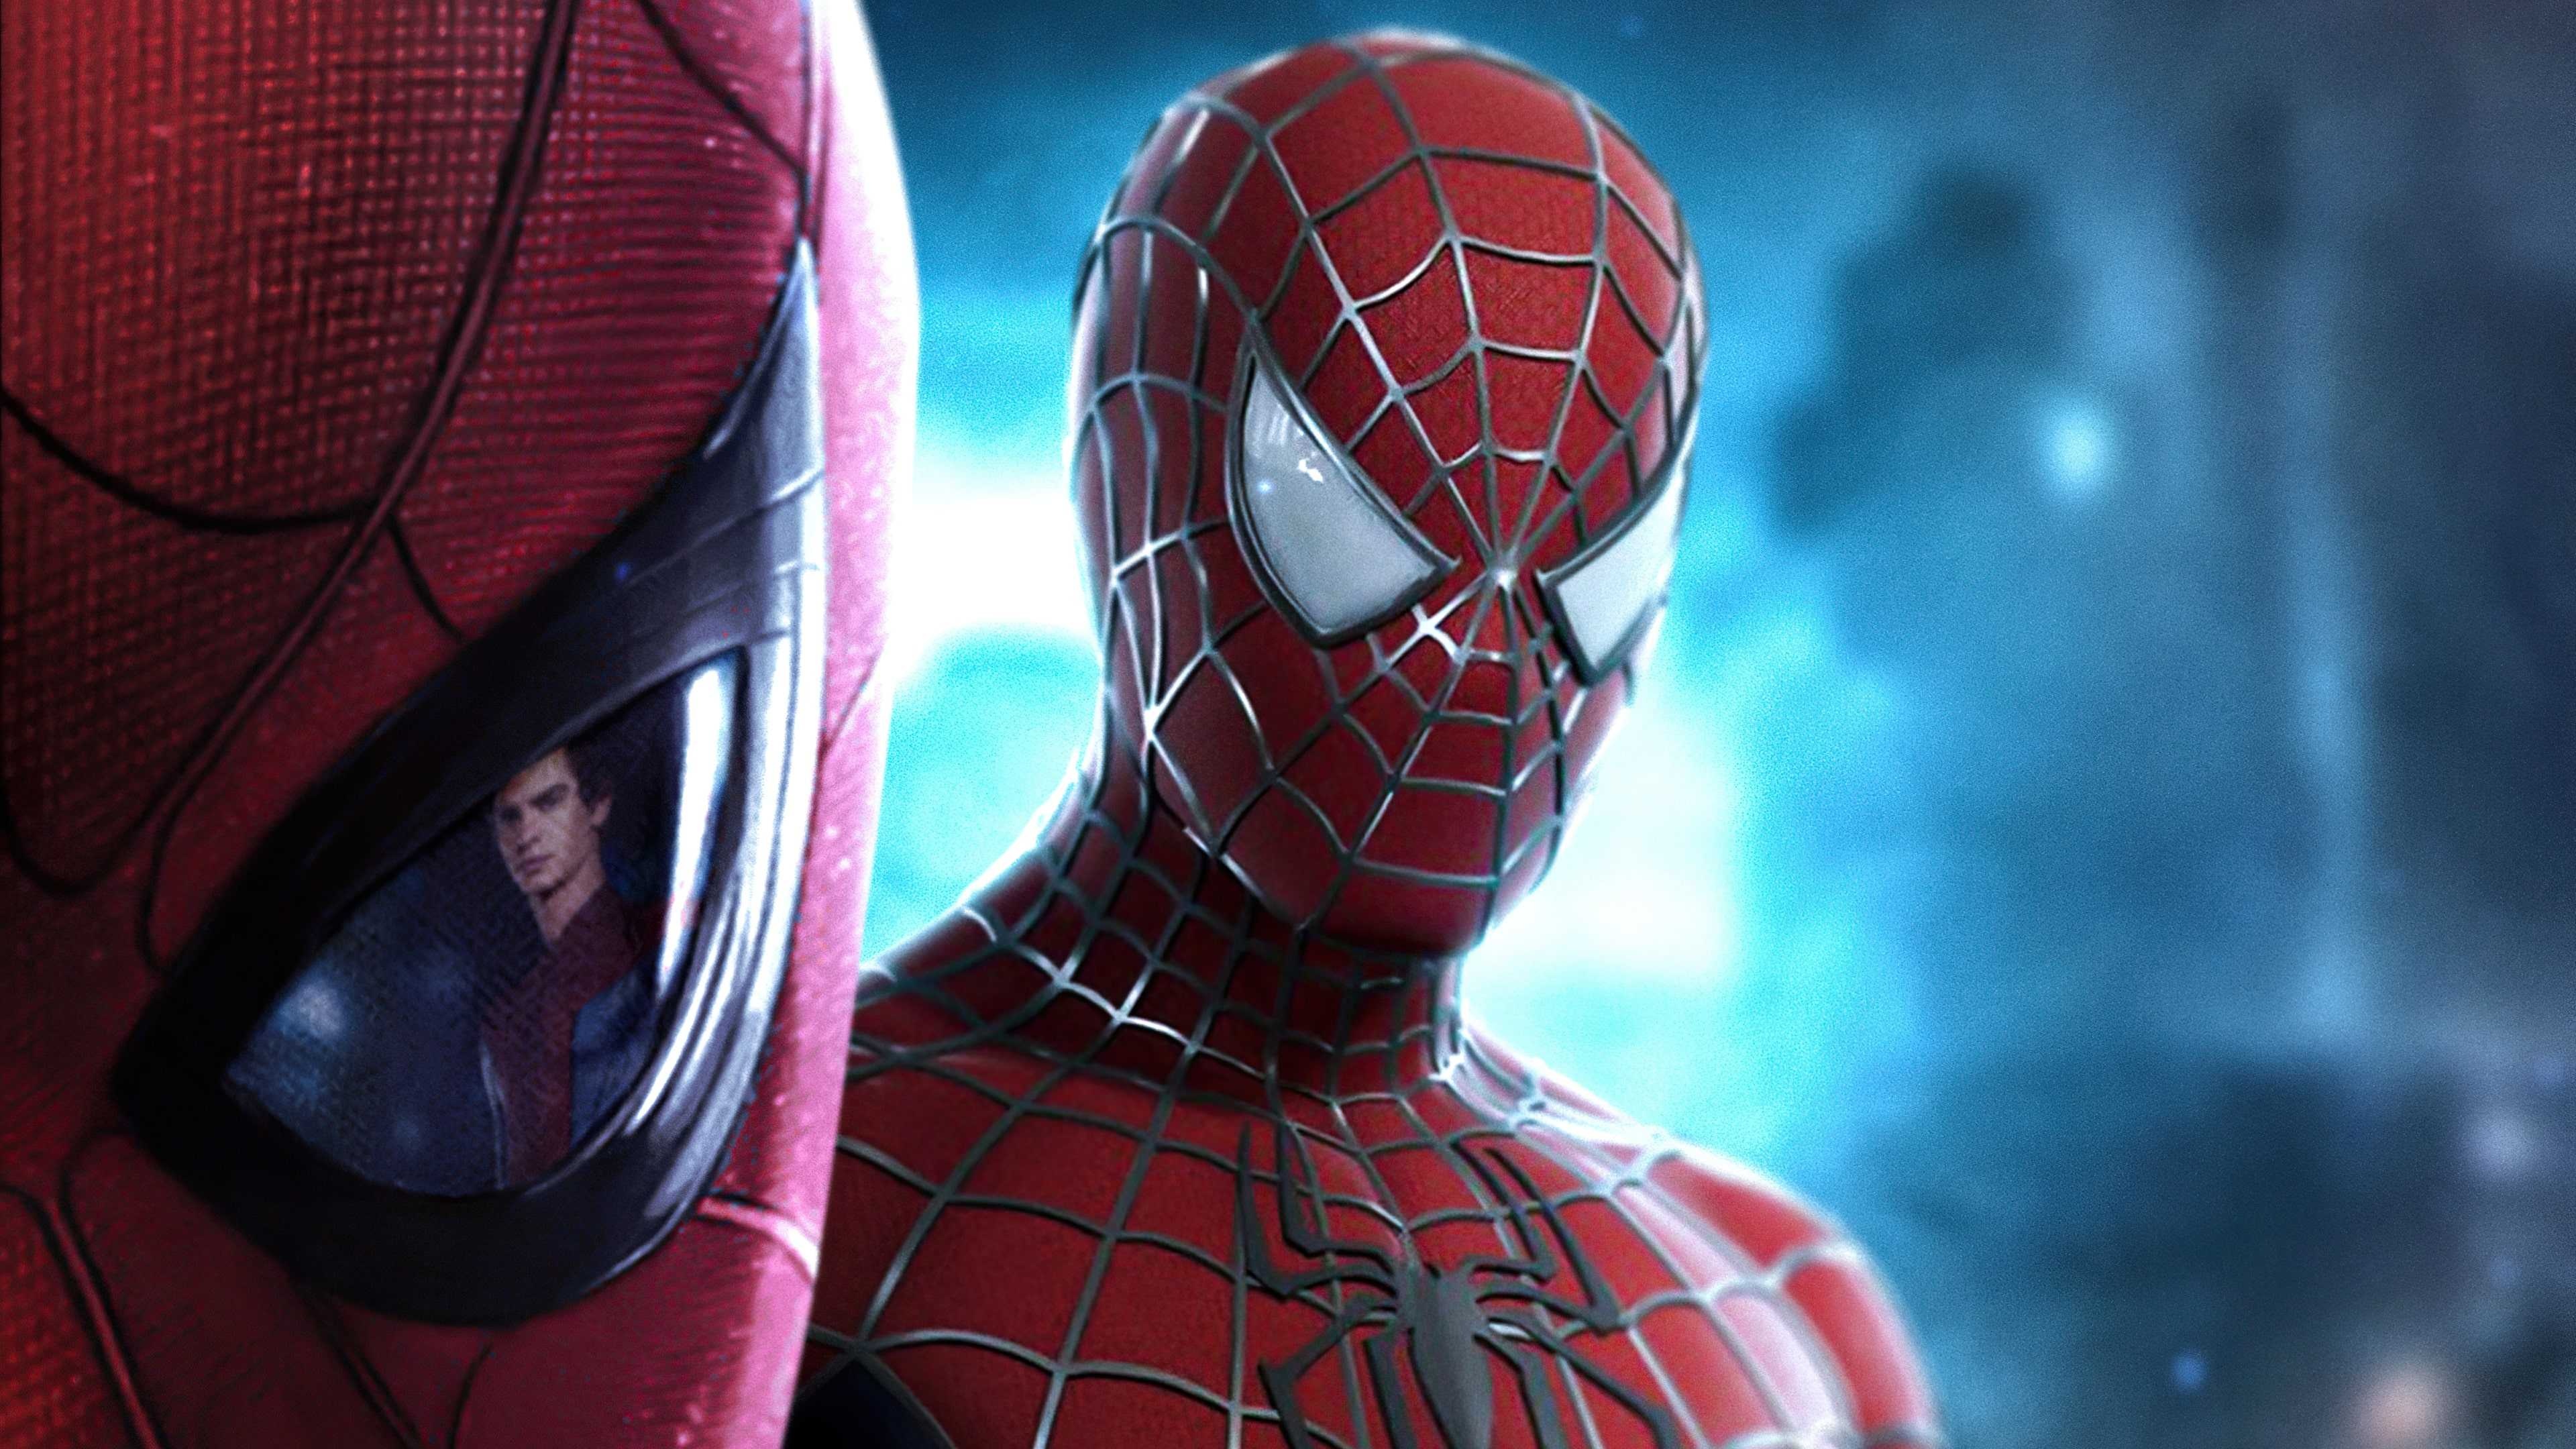 Spider-Man: No Way Home, Wallpaper for Marvel fans, Upcoming movie anticipation, 3840x2160 4K Desktop